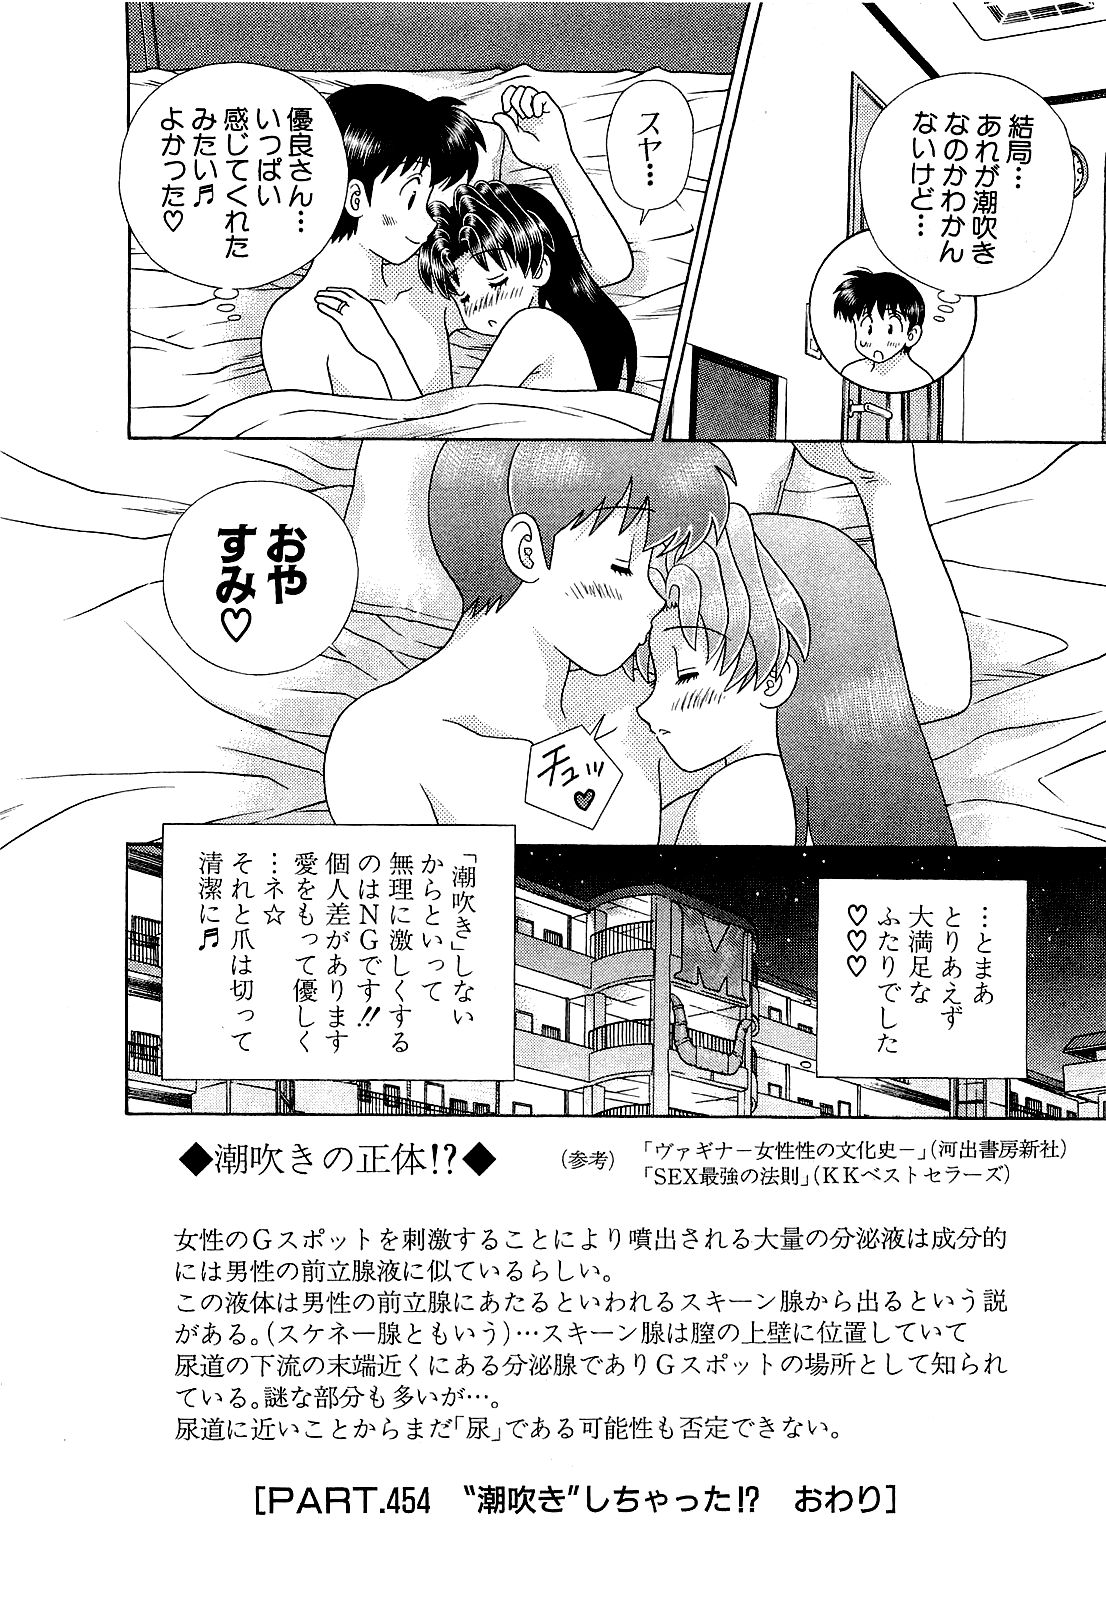 Katsu Aki Futari Ecchi Hentai Manga Read Free Hentai Xxx Manga Online